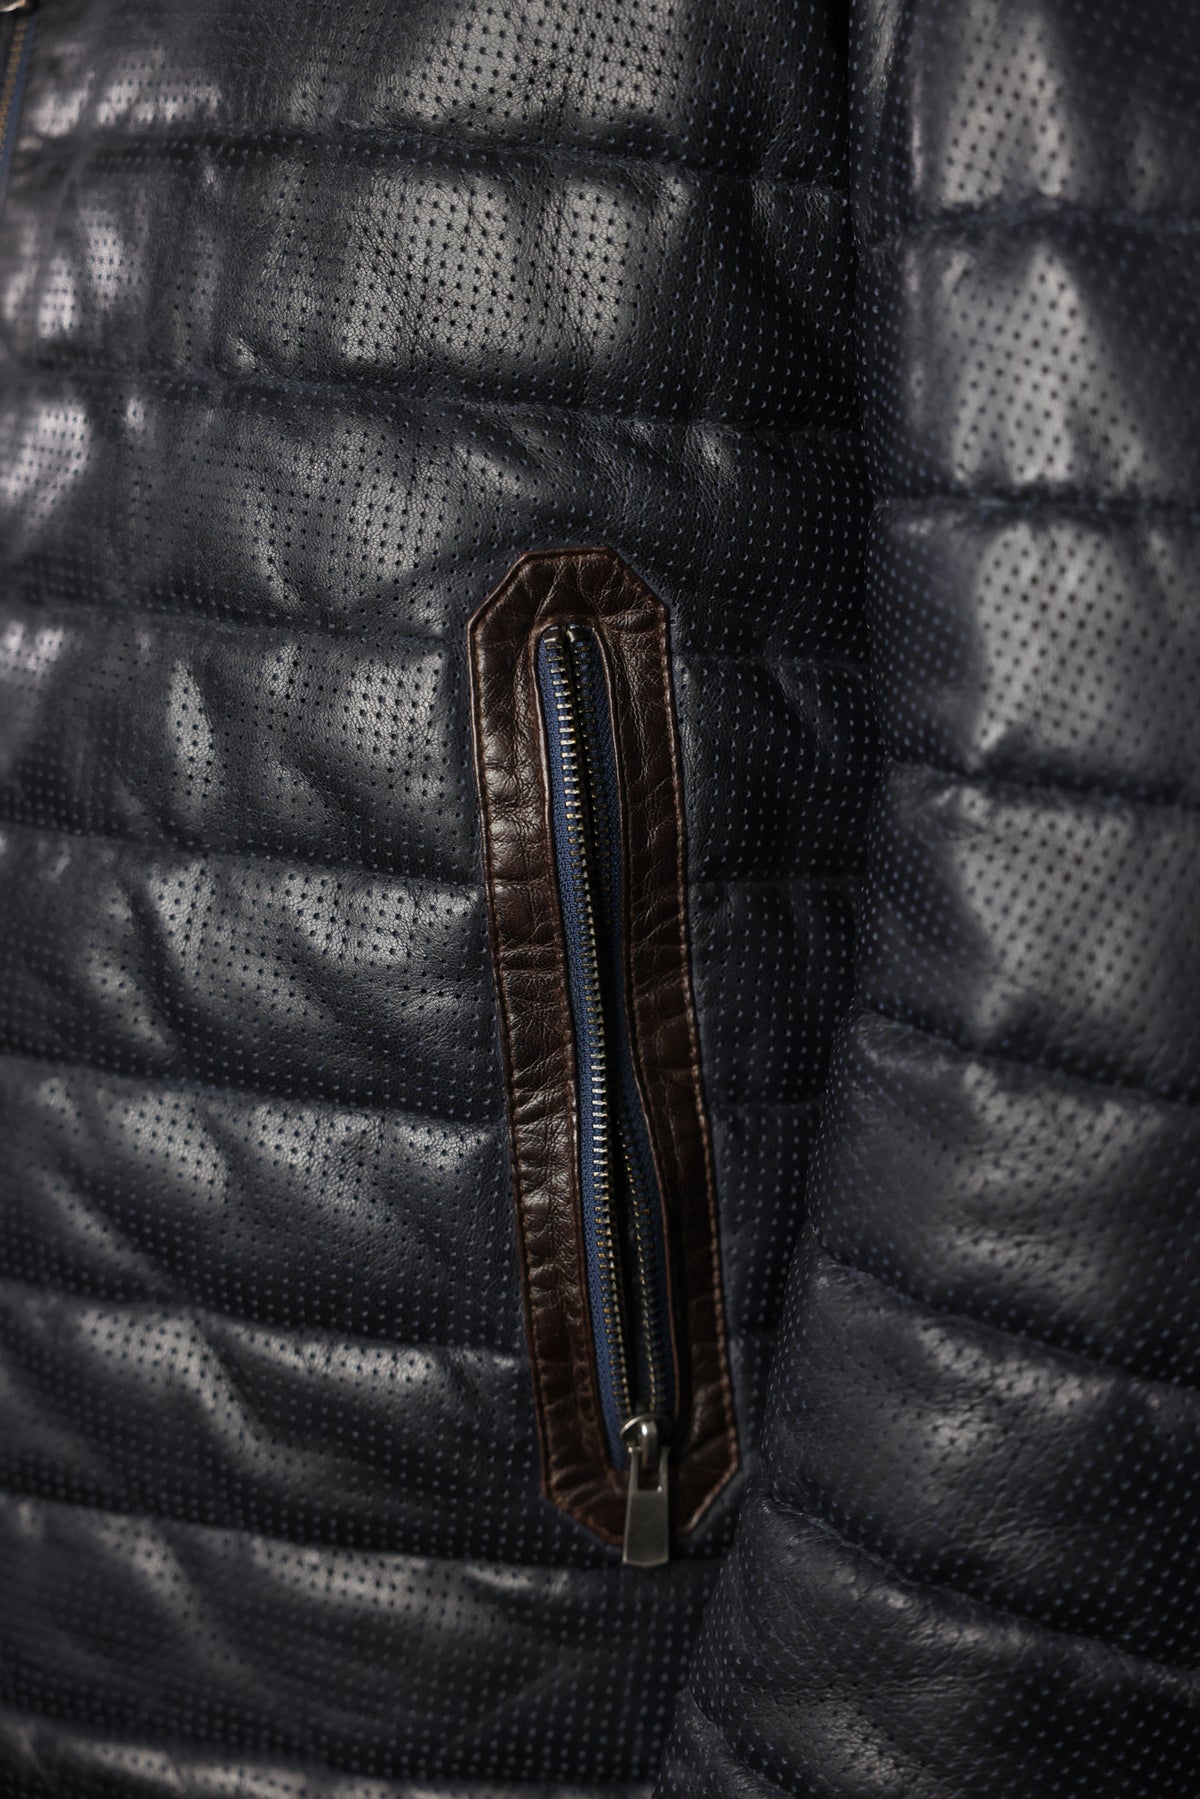 Alberto Zimni Leather Jacket